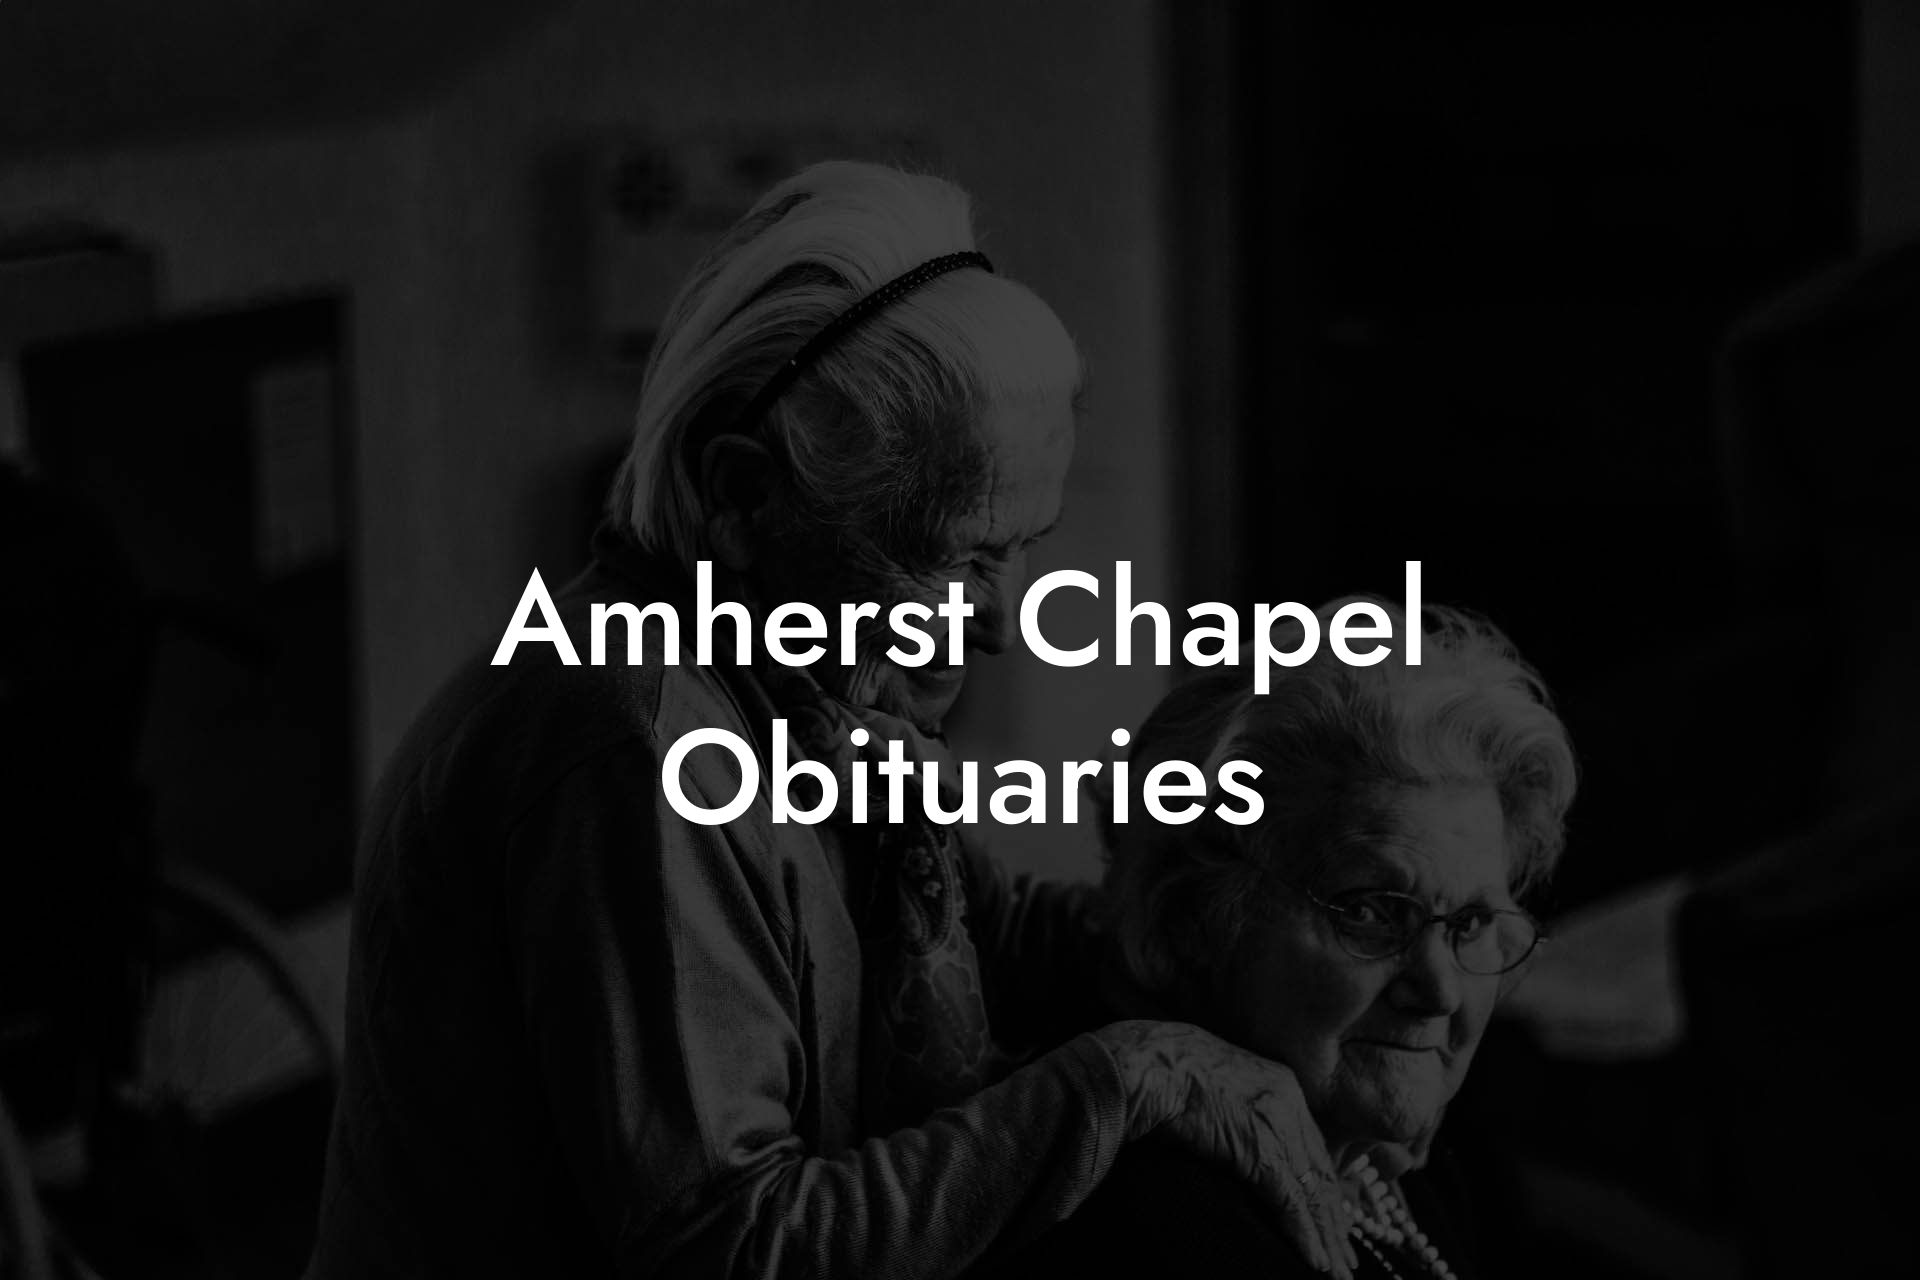 Amherst Chapel Obituaries